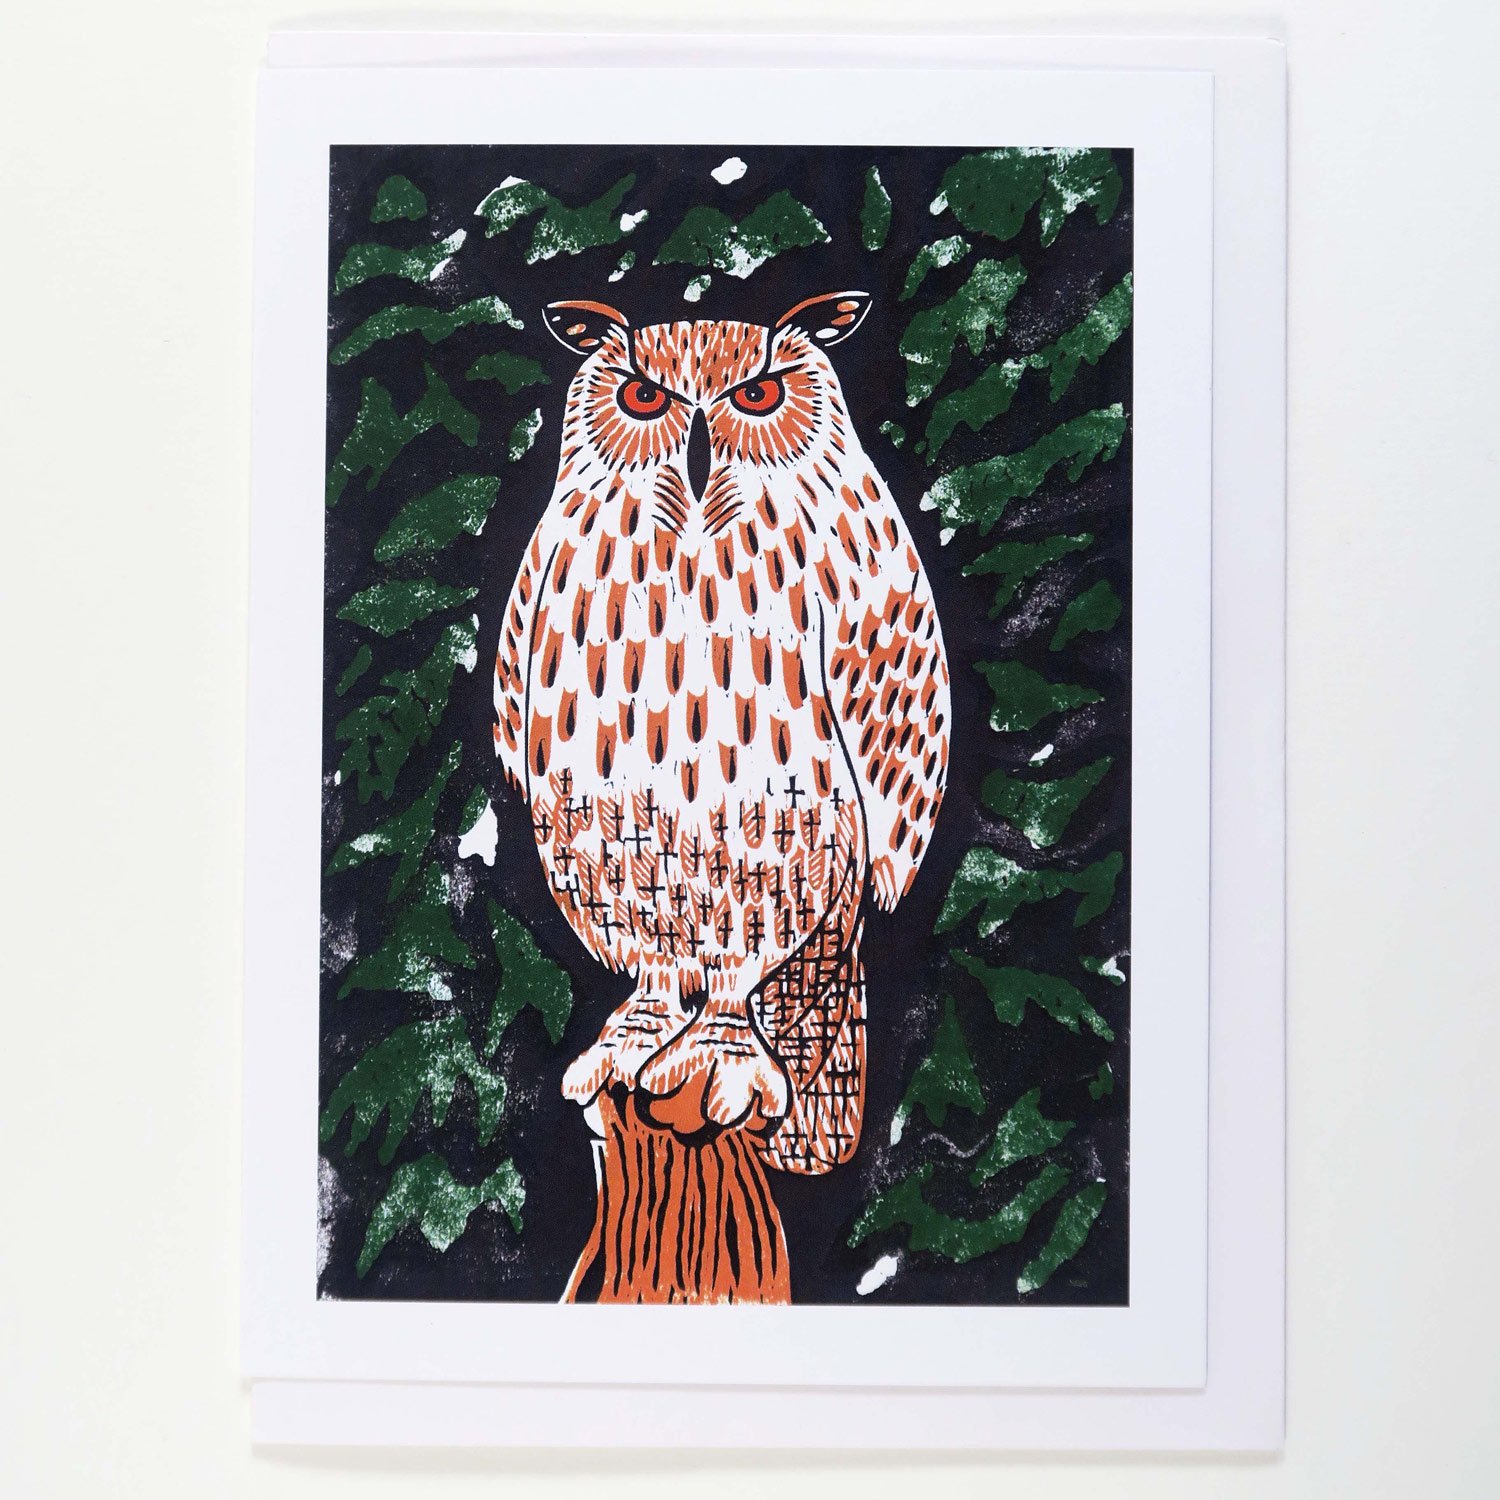 Upfunt-lino-cut-prints-childrens-books-illustration-Brighton-UK-cards-E.-Owl.jpg